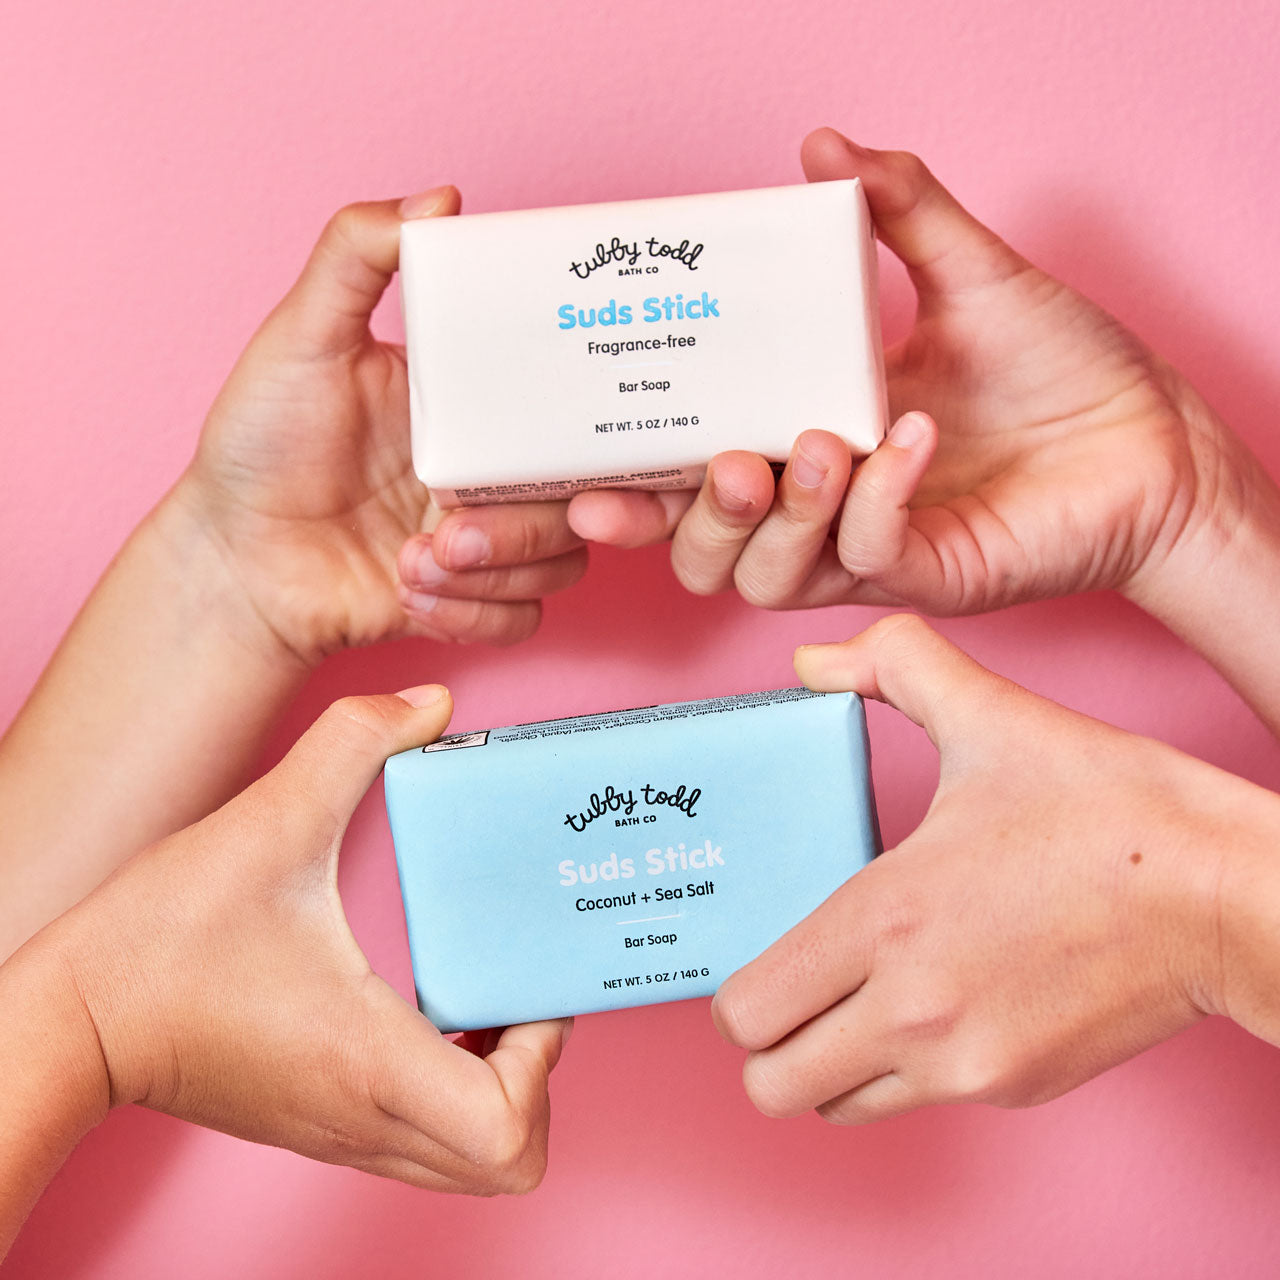 Girls hands holding Coconut + Sea Salt and Fragrance-free Suds Stick Bar Soap